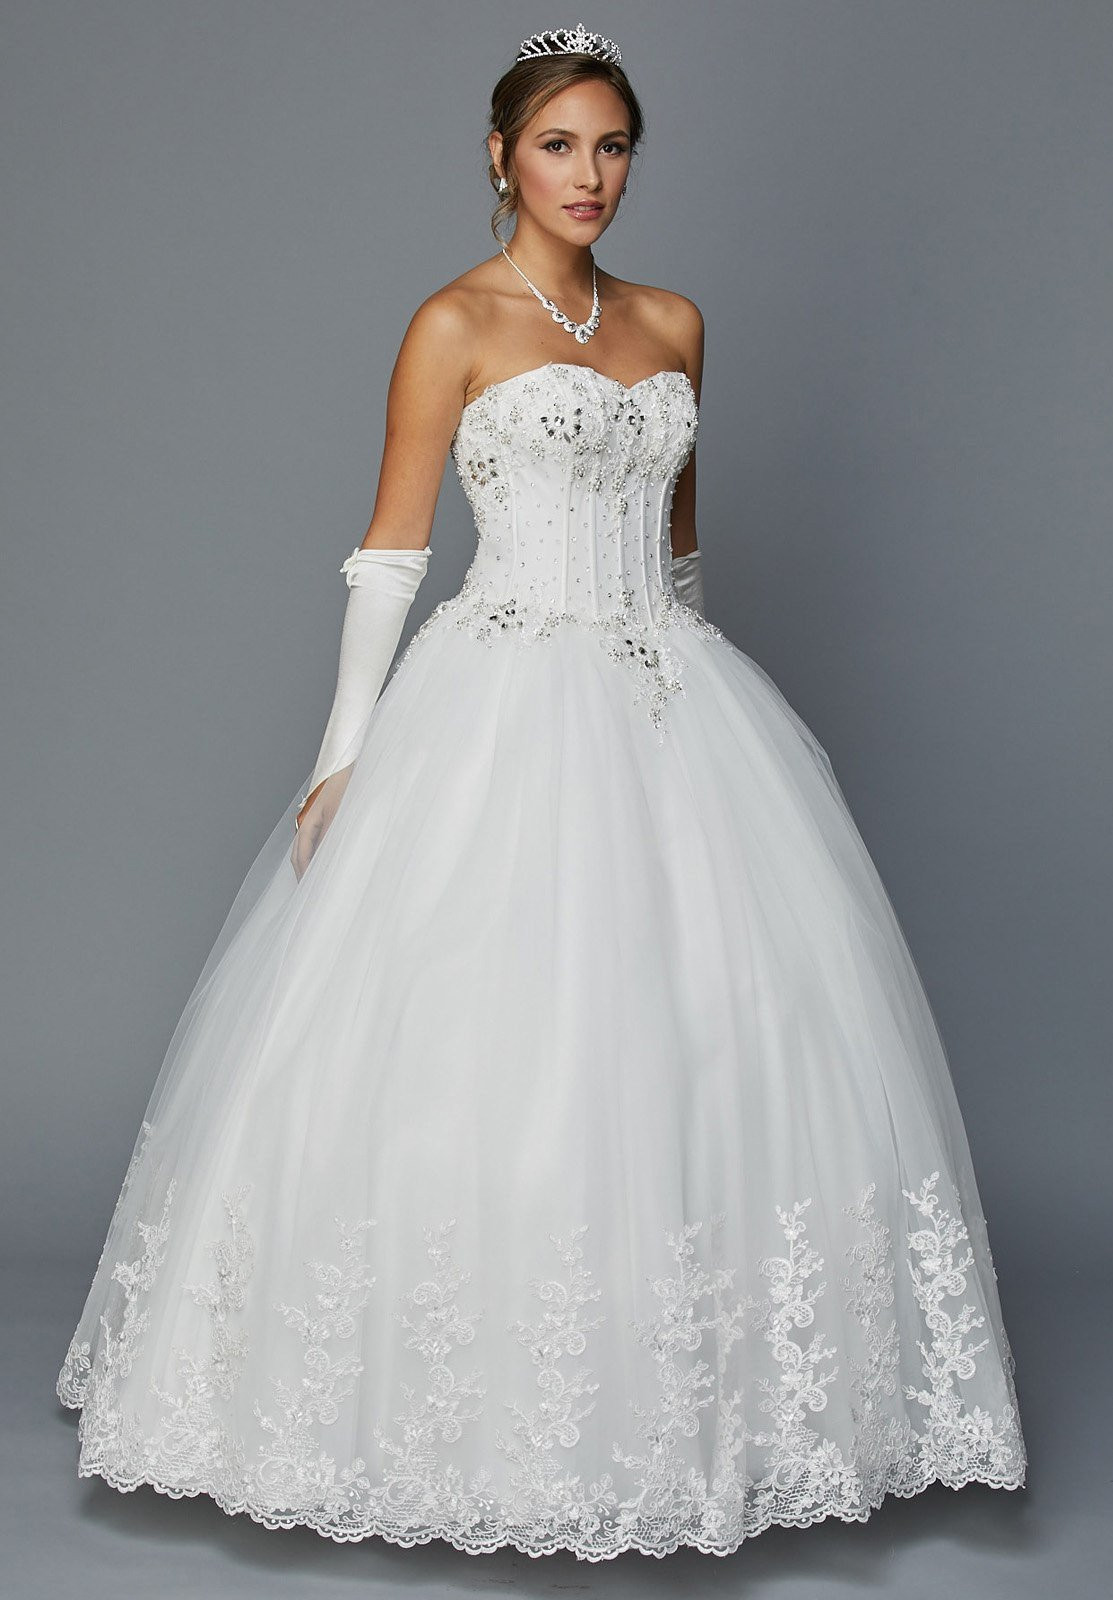 White Ball Gown Wedding Dresses
 Juliet 352 Jewel Bodice Strapless Ball Gown Wedding Dress